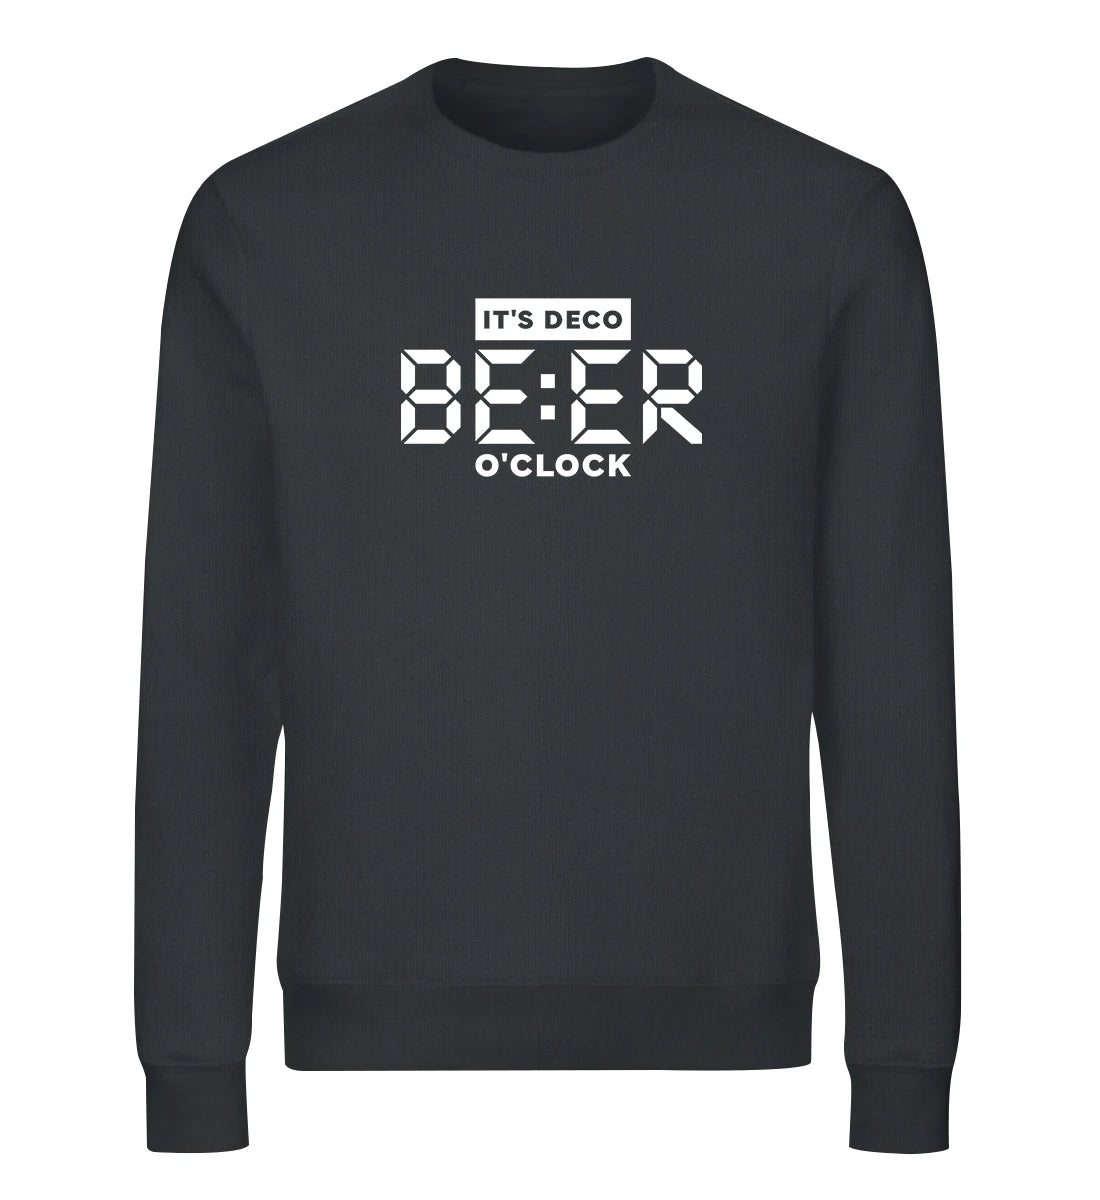 Deco Beer O'Clock - Bio Sweater